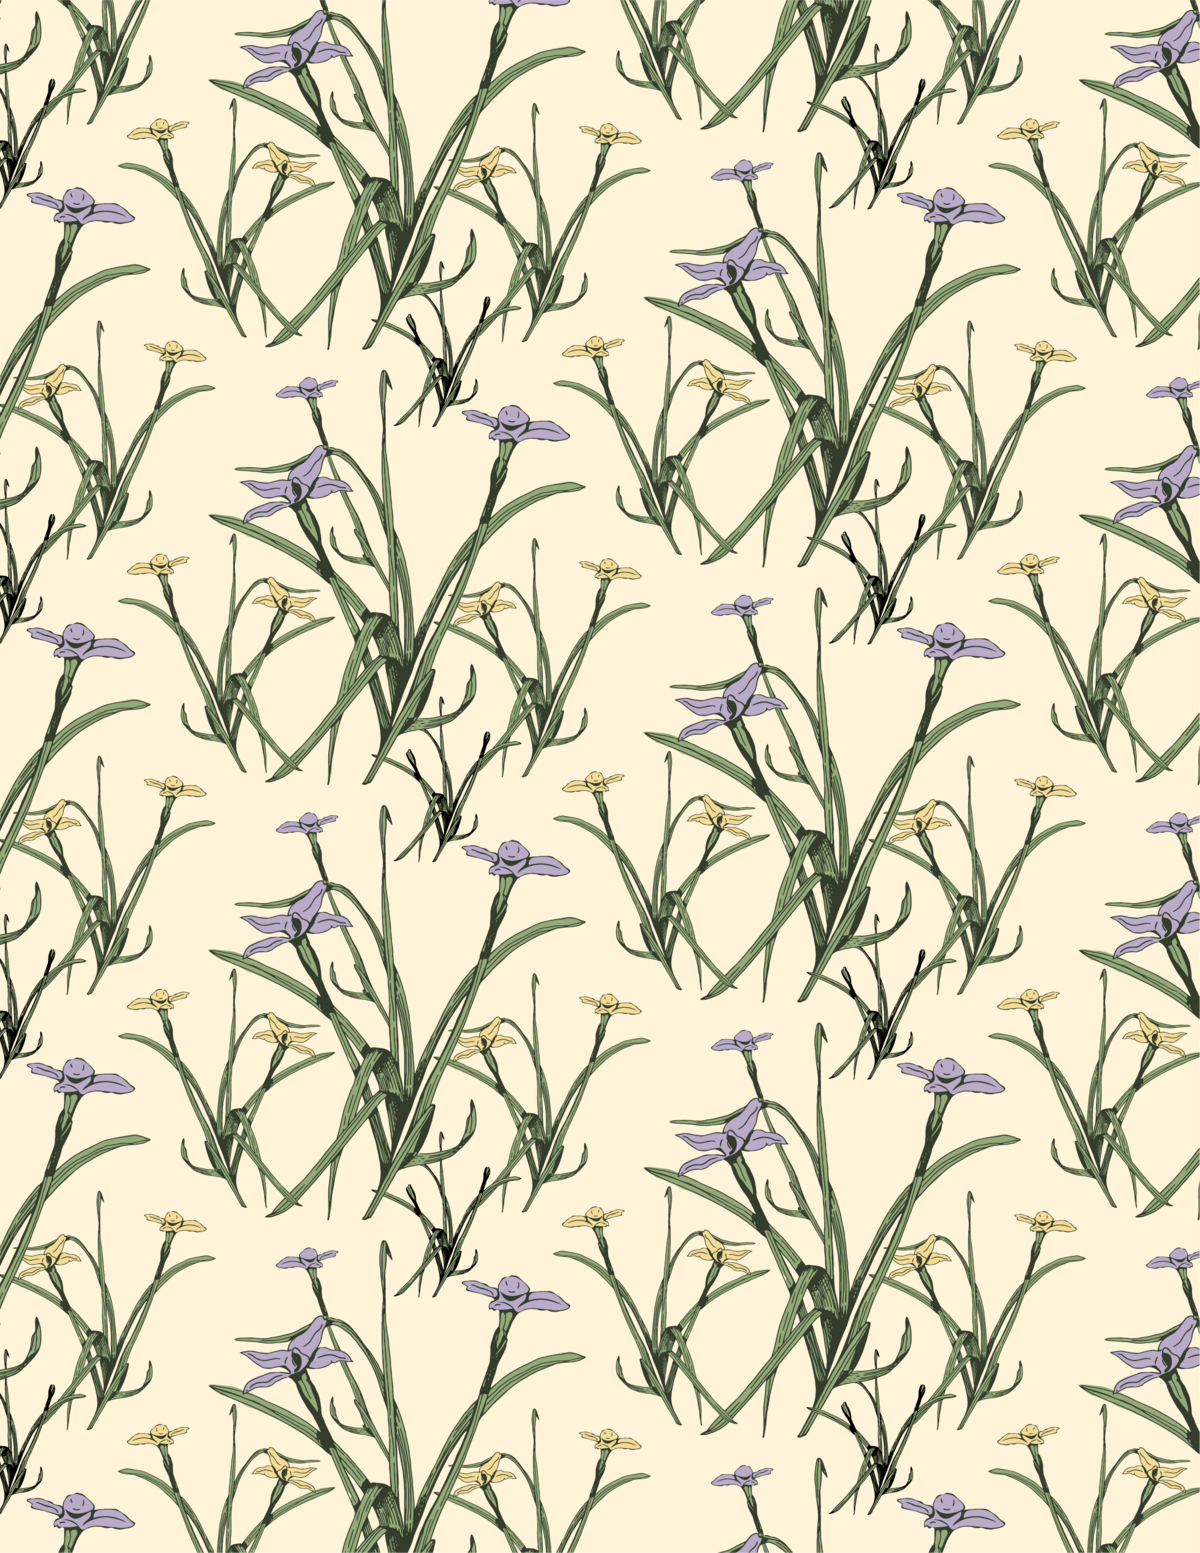 Wild Irises Combo